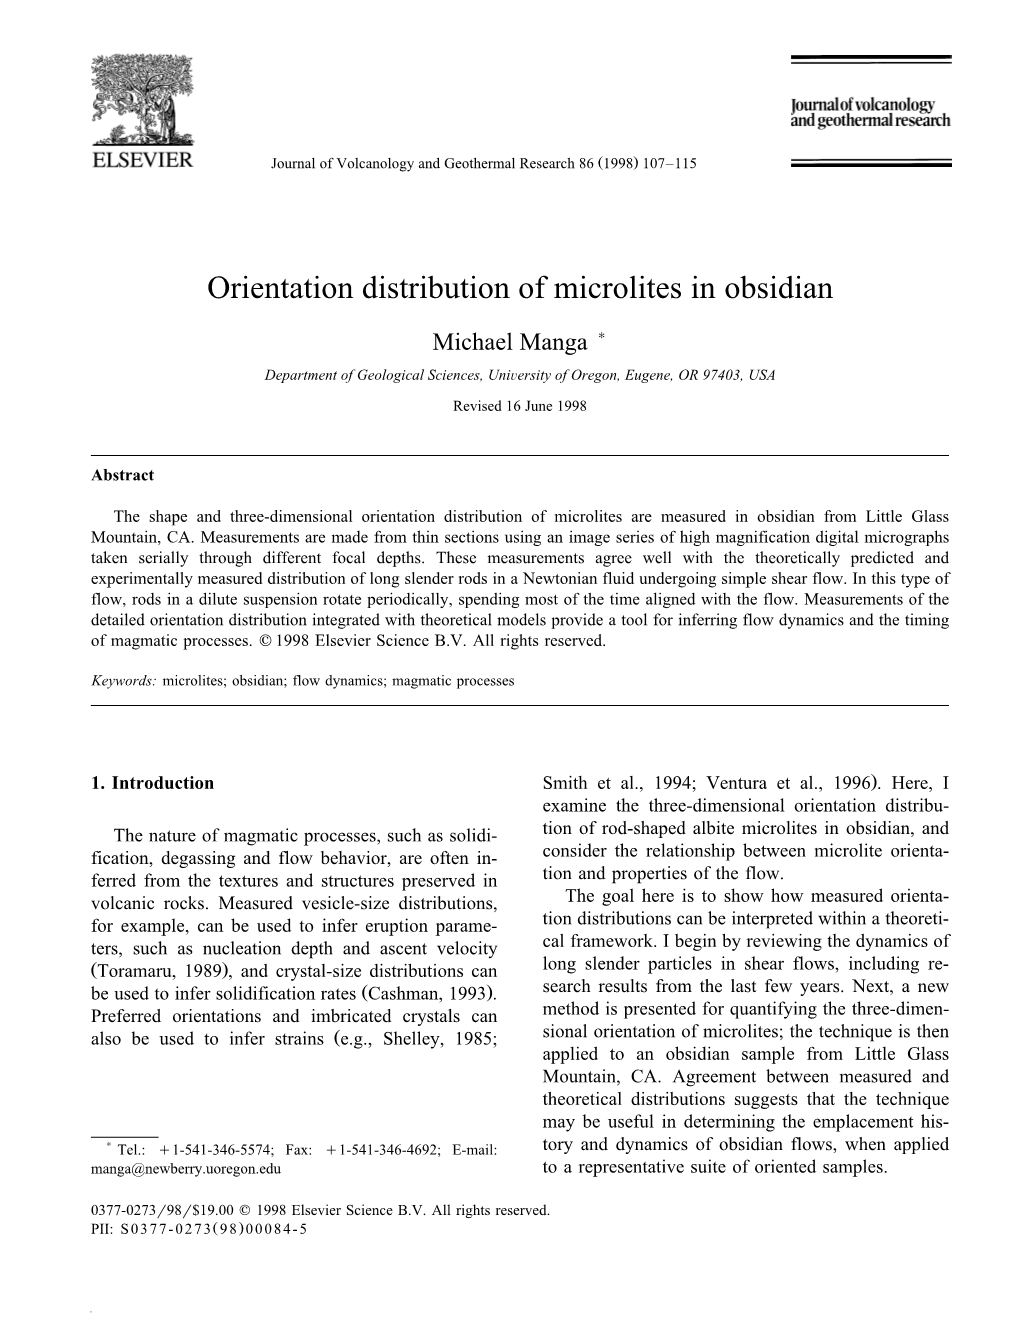 Orientation Distribution of Microlites in Obsidian